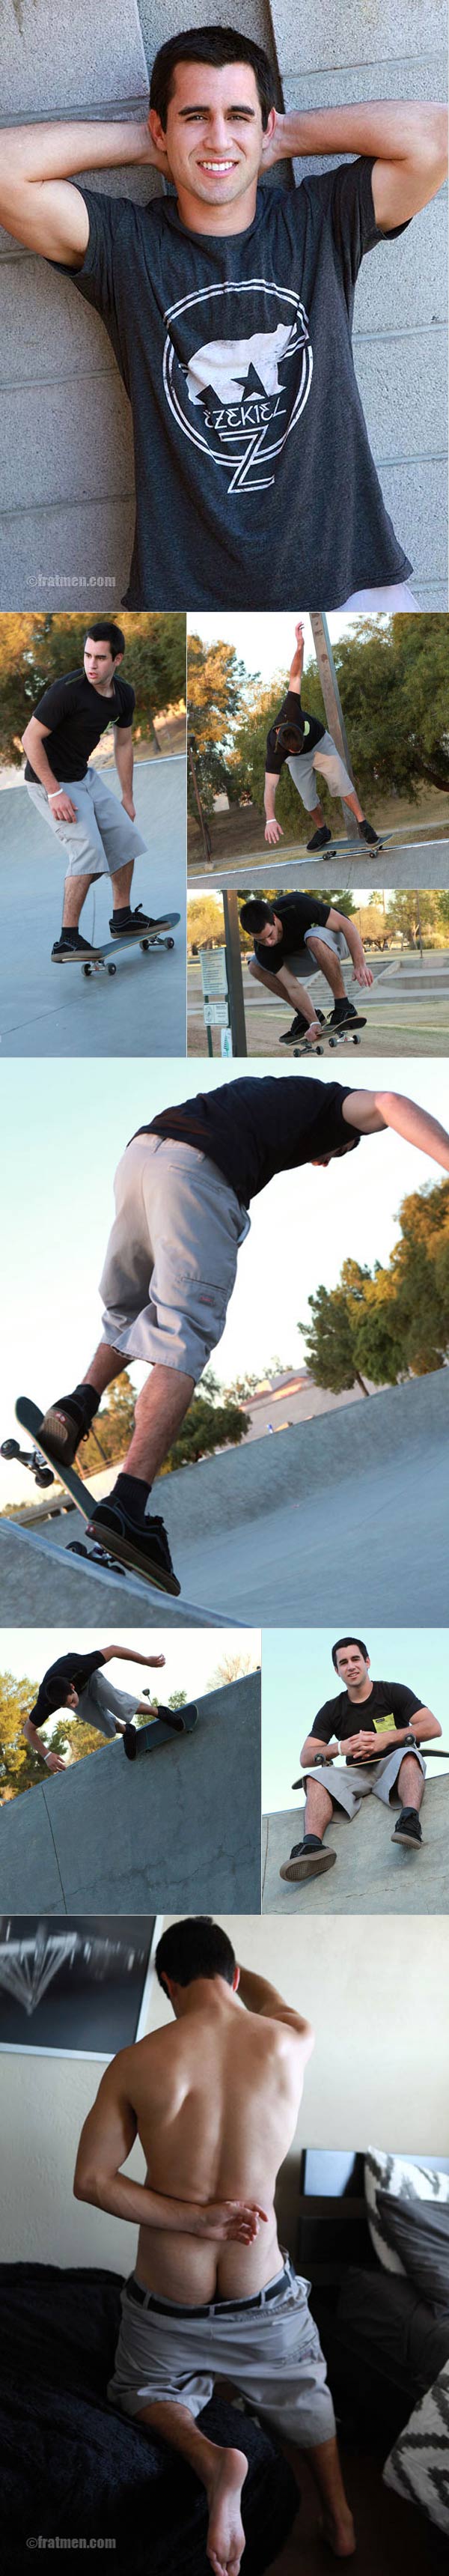 Archer (Young Male Skateboarder) at Fratmen.tv